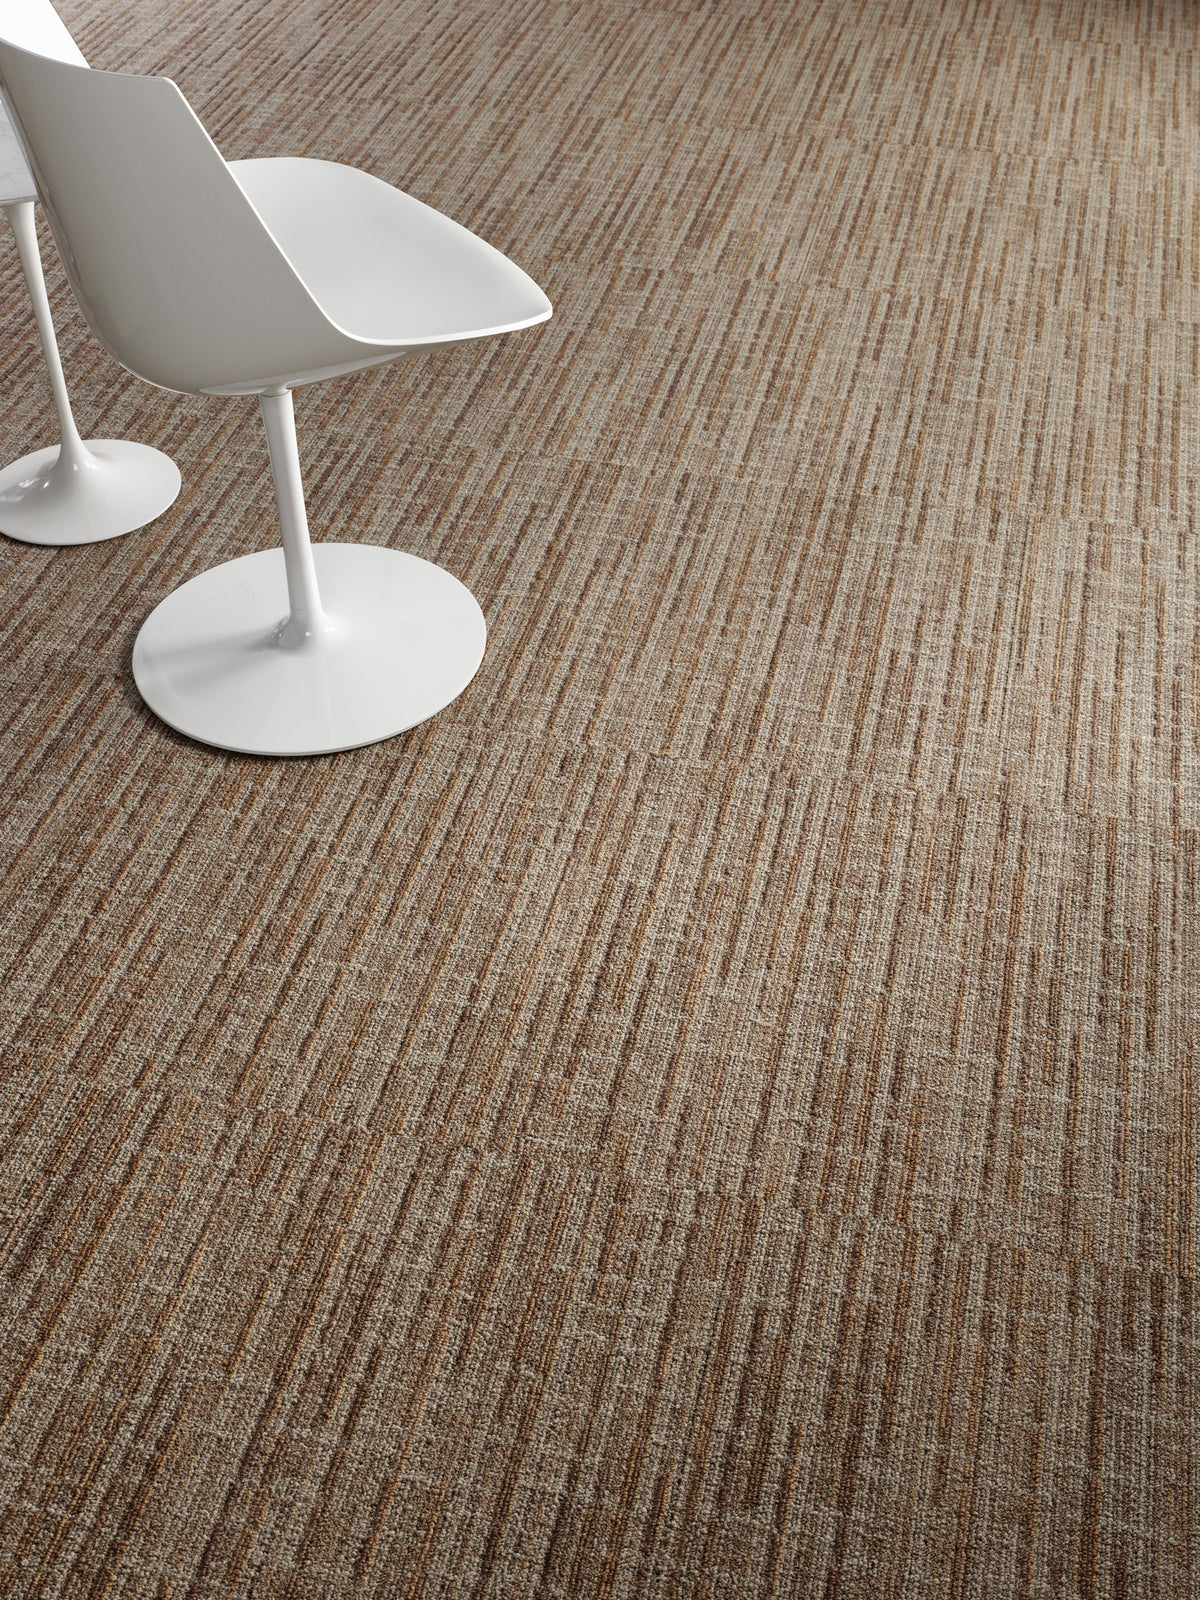 Mohawk Group - Mind Over Matter - Forward Vision - Commercial Carpet Tile - Expertise